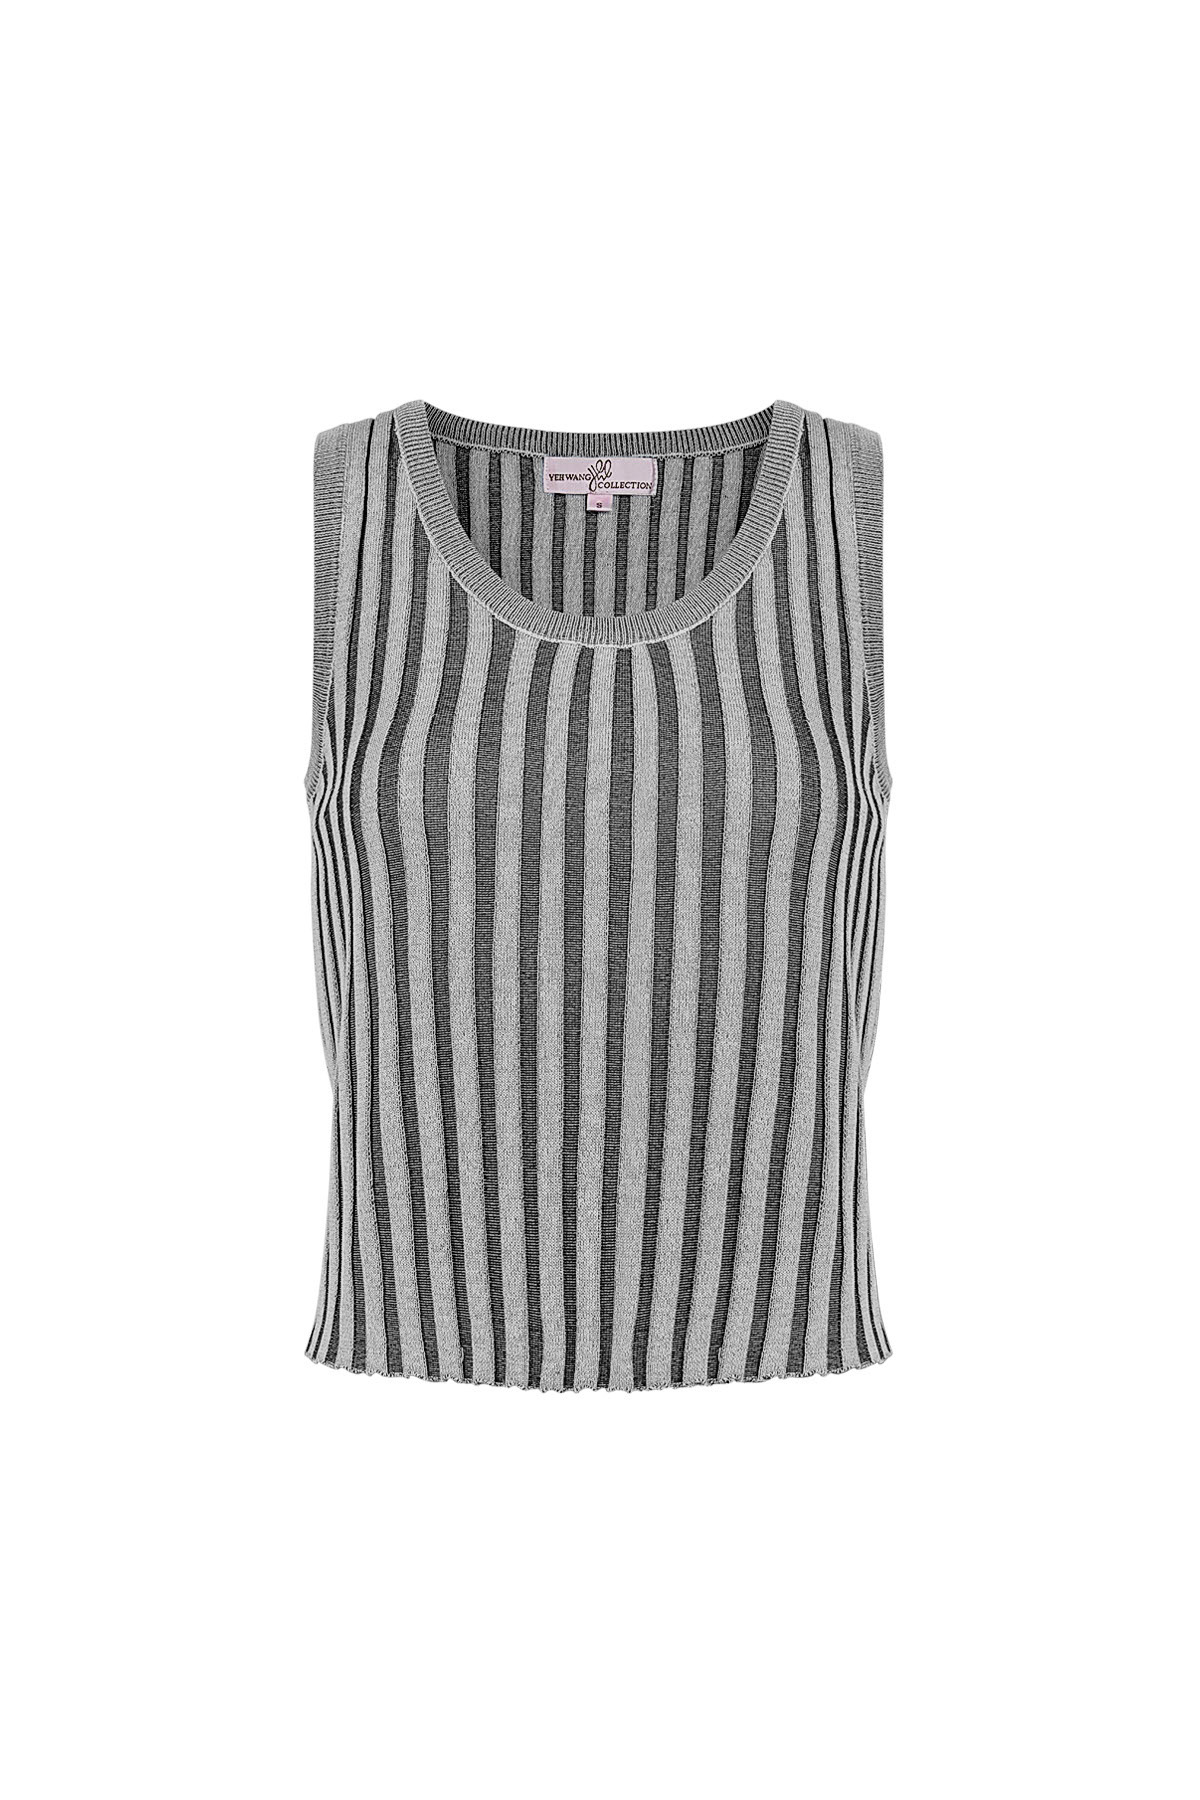 Sleeveless, striped top medium – gray 